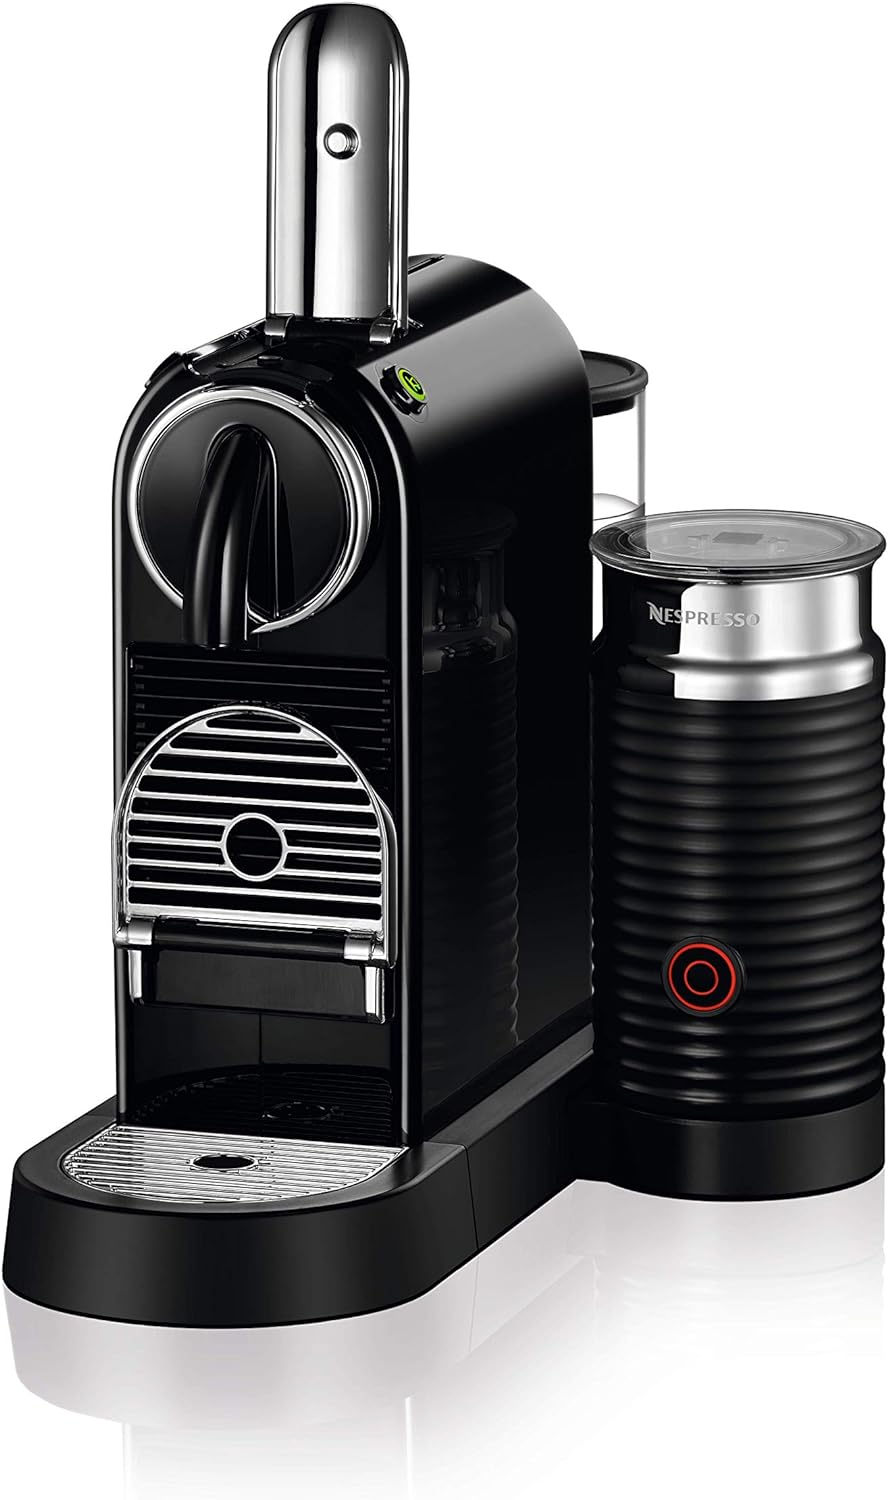 Magimix 11317 CitiZ and Milk Nespresso Coffee Machine - Black